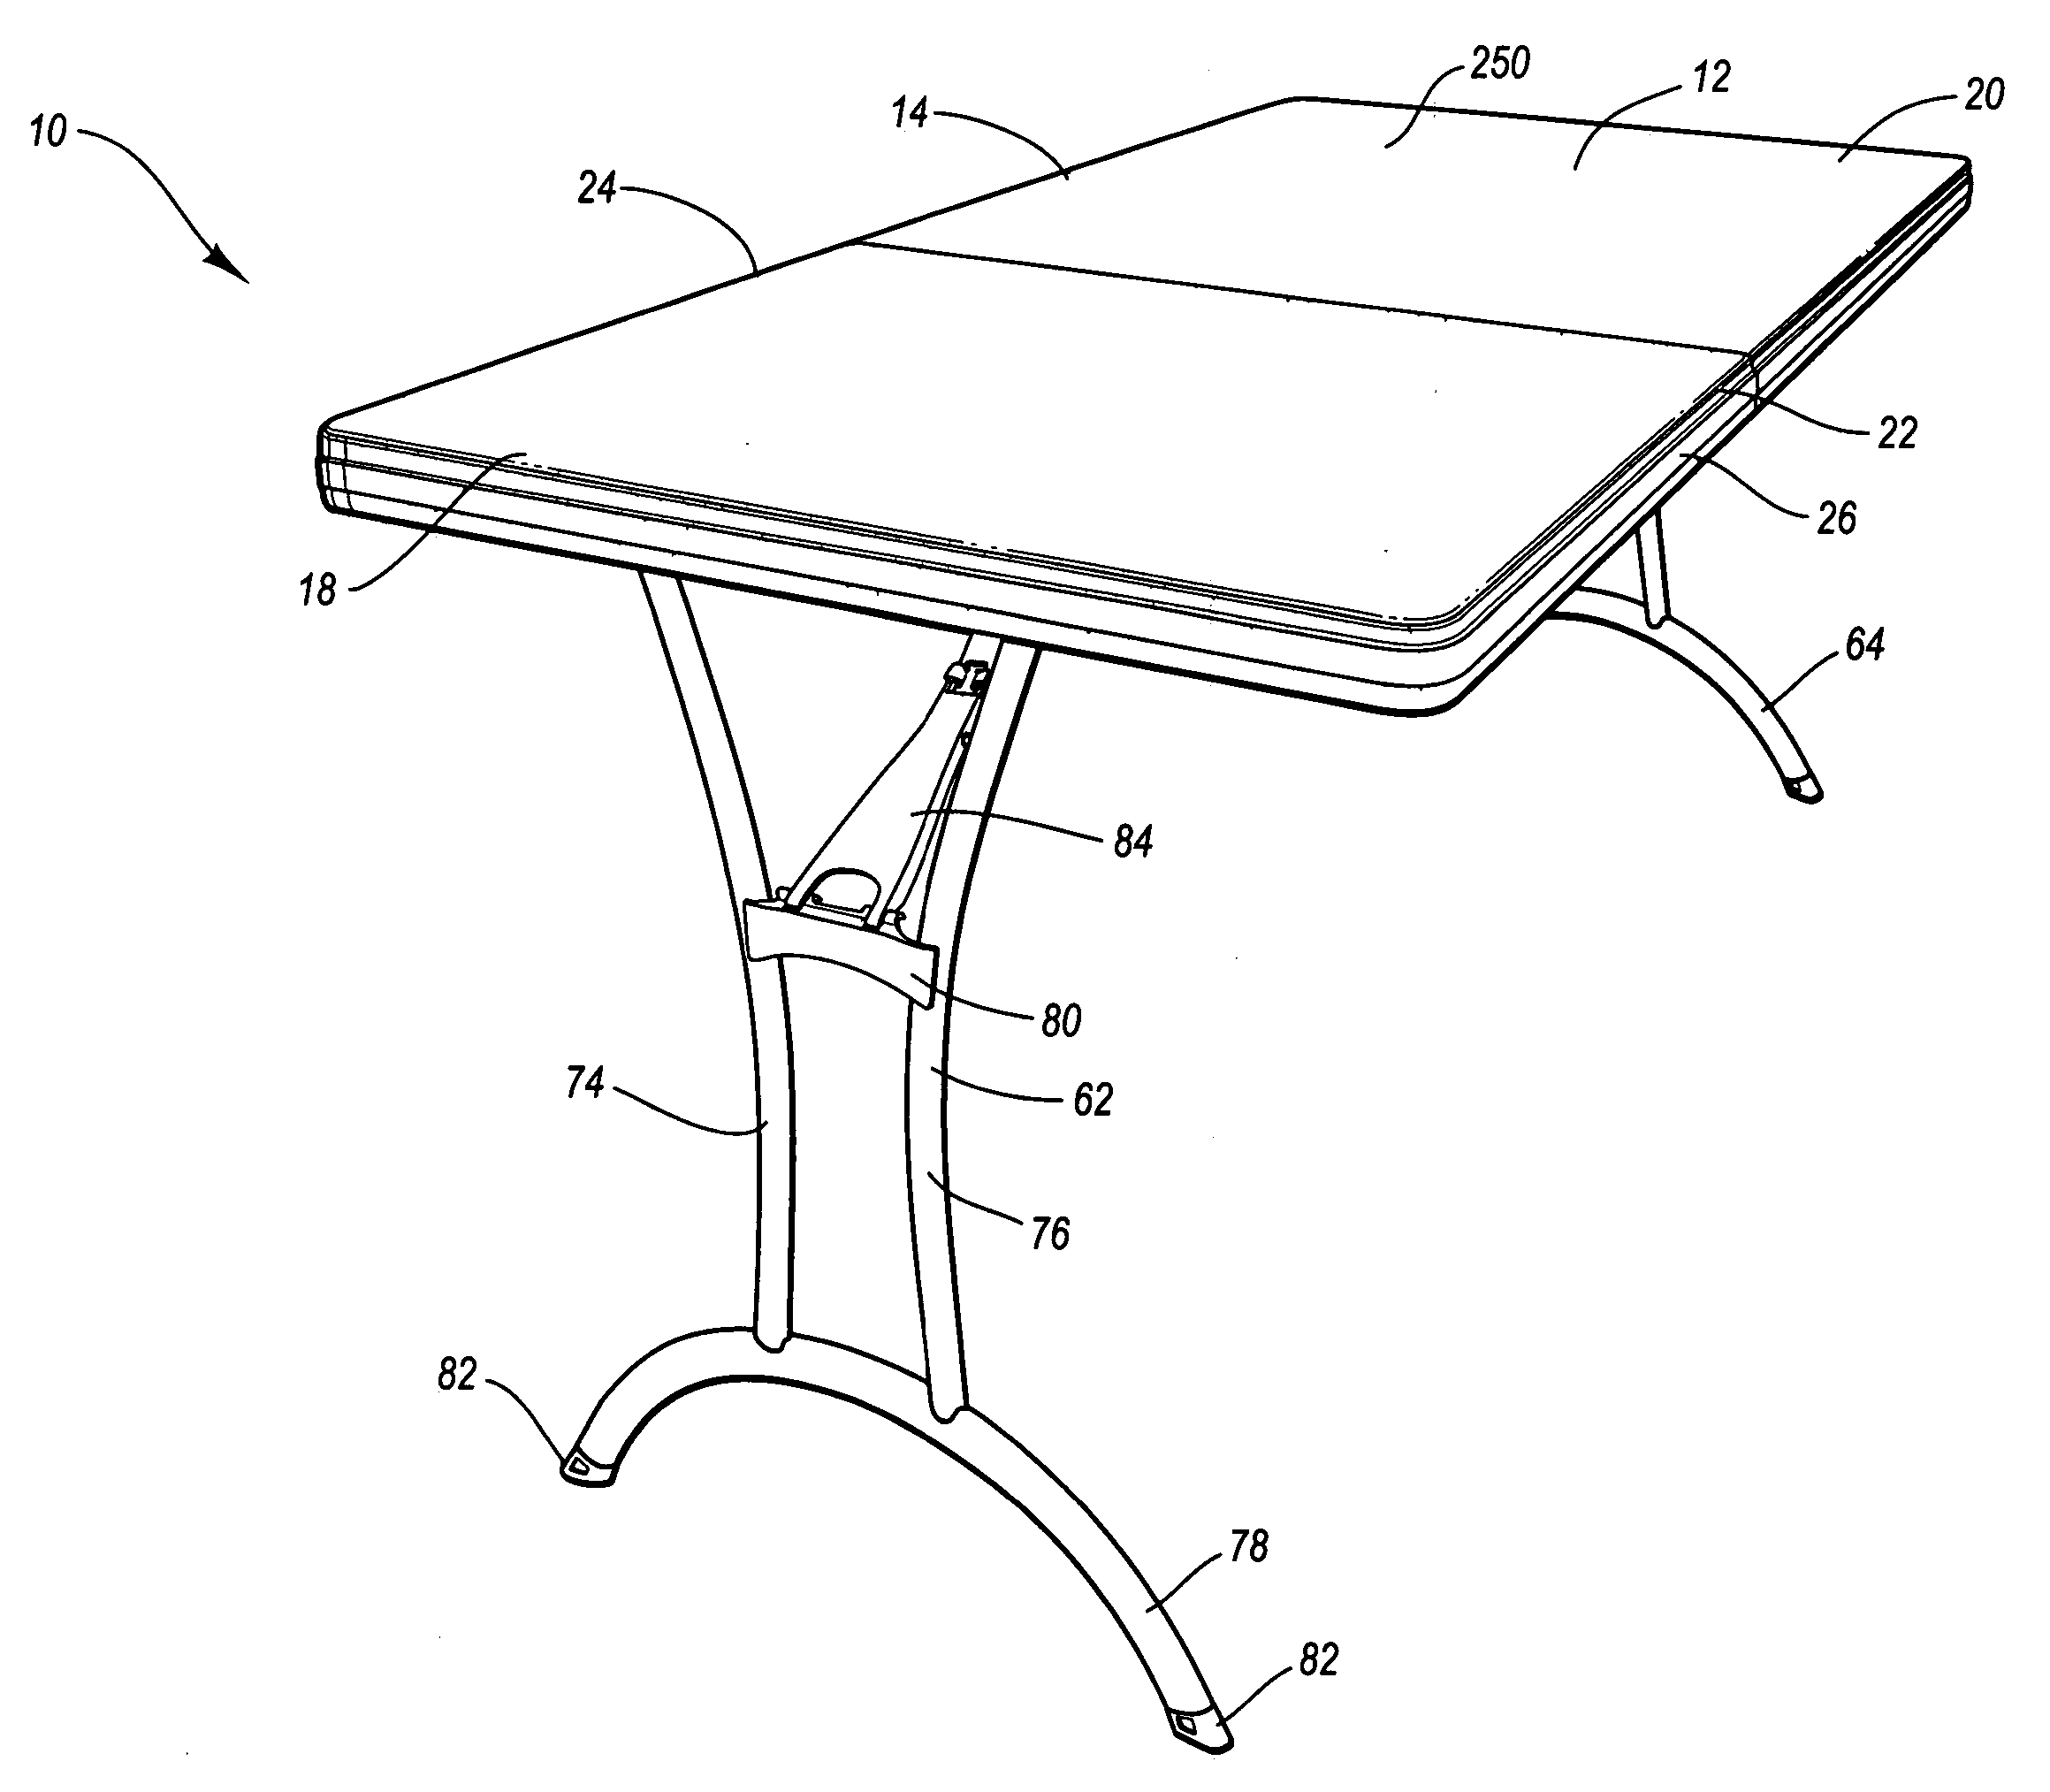 Portable folding table with locking hinge